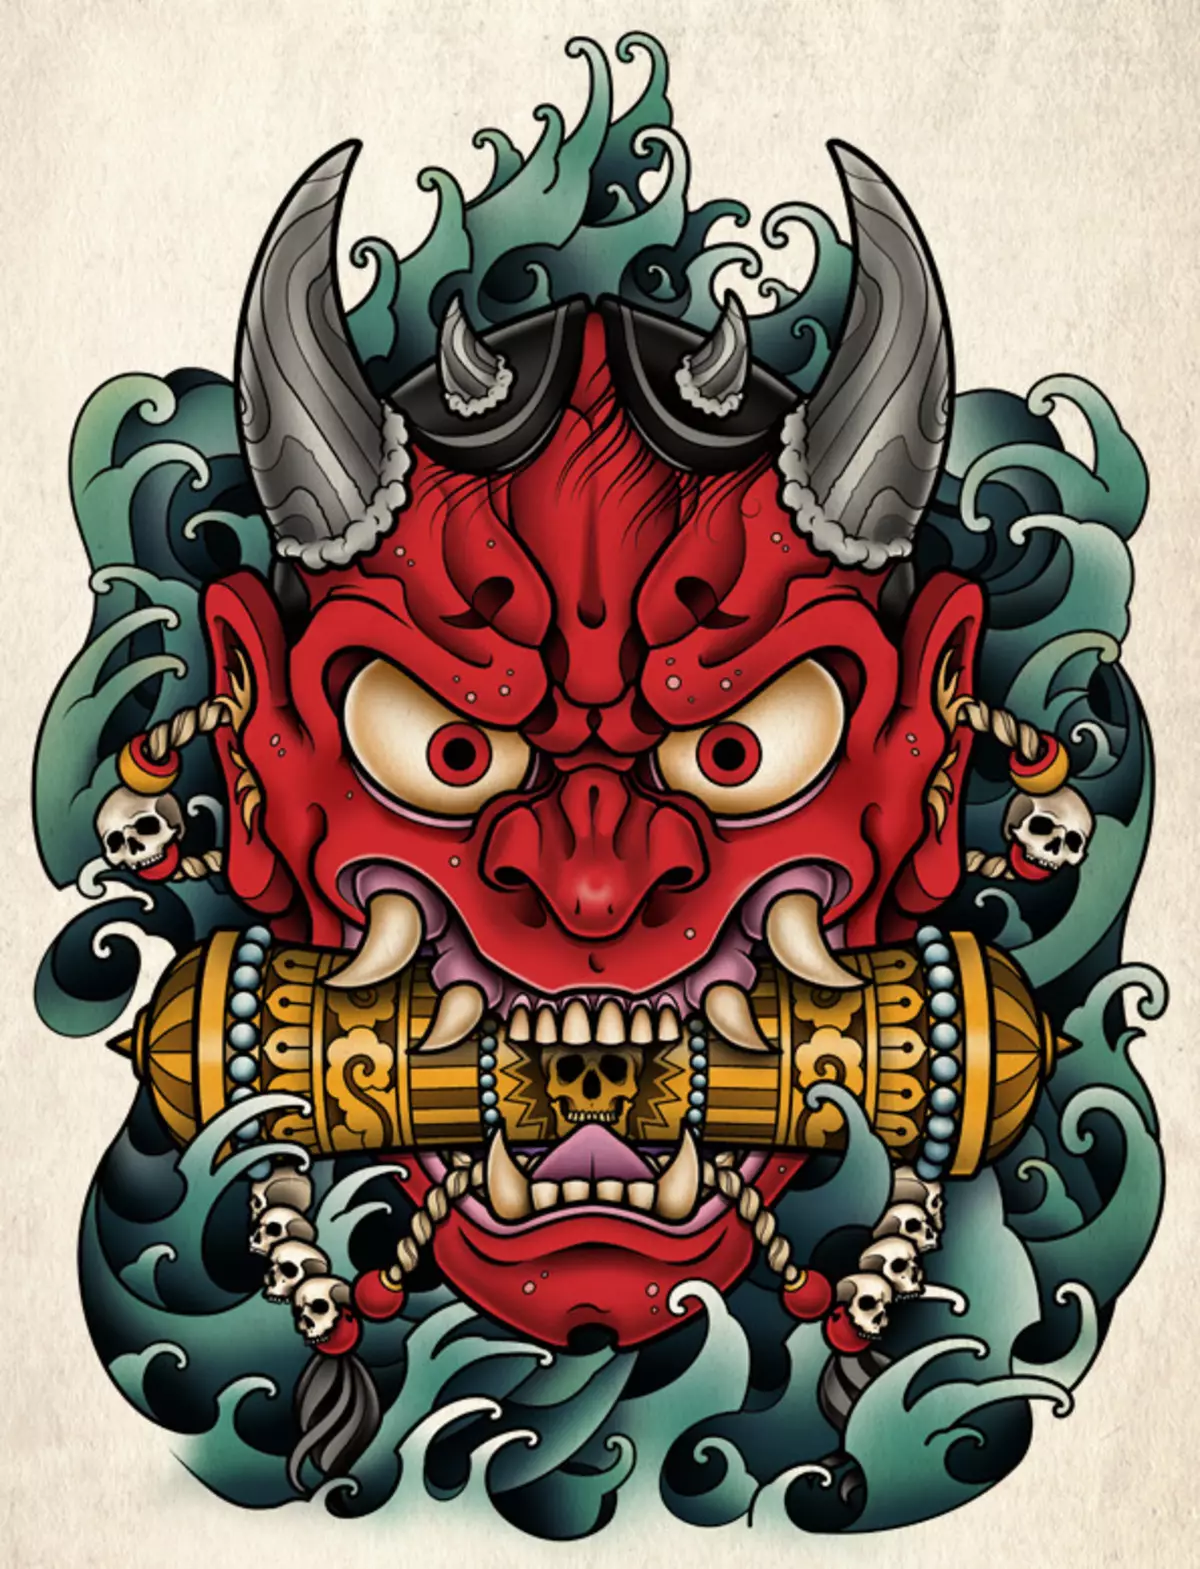 Tattoo ճապոնական դիմակների տեսքով. Դեւեր եւ դրանց իմաստները: Դաջվածքների էսքիզներ Japan ապոնիայի դիմակների ոճով: Դաջվածքի «Սատանան» ձեռքին եւ դիցաբանության այլ սարսափելի հերոսների վրա 270_10